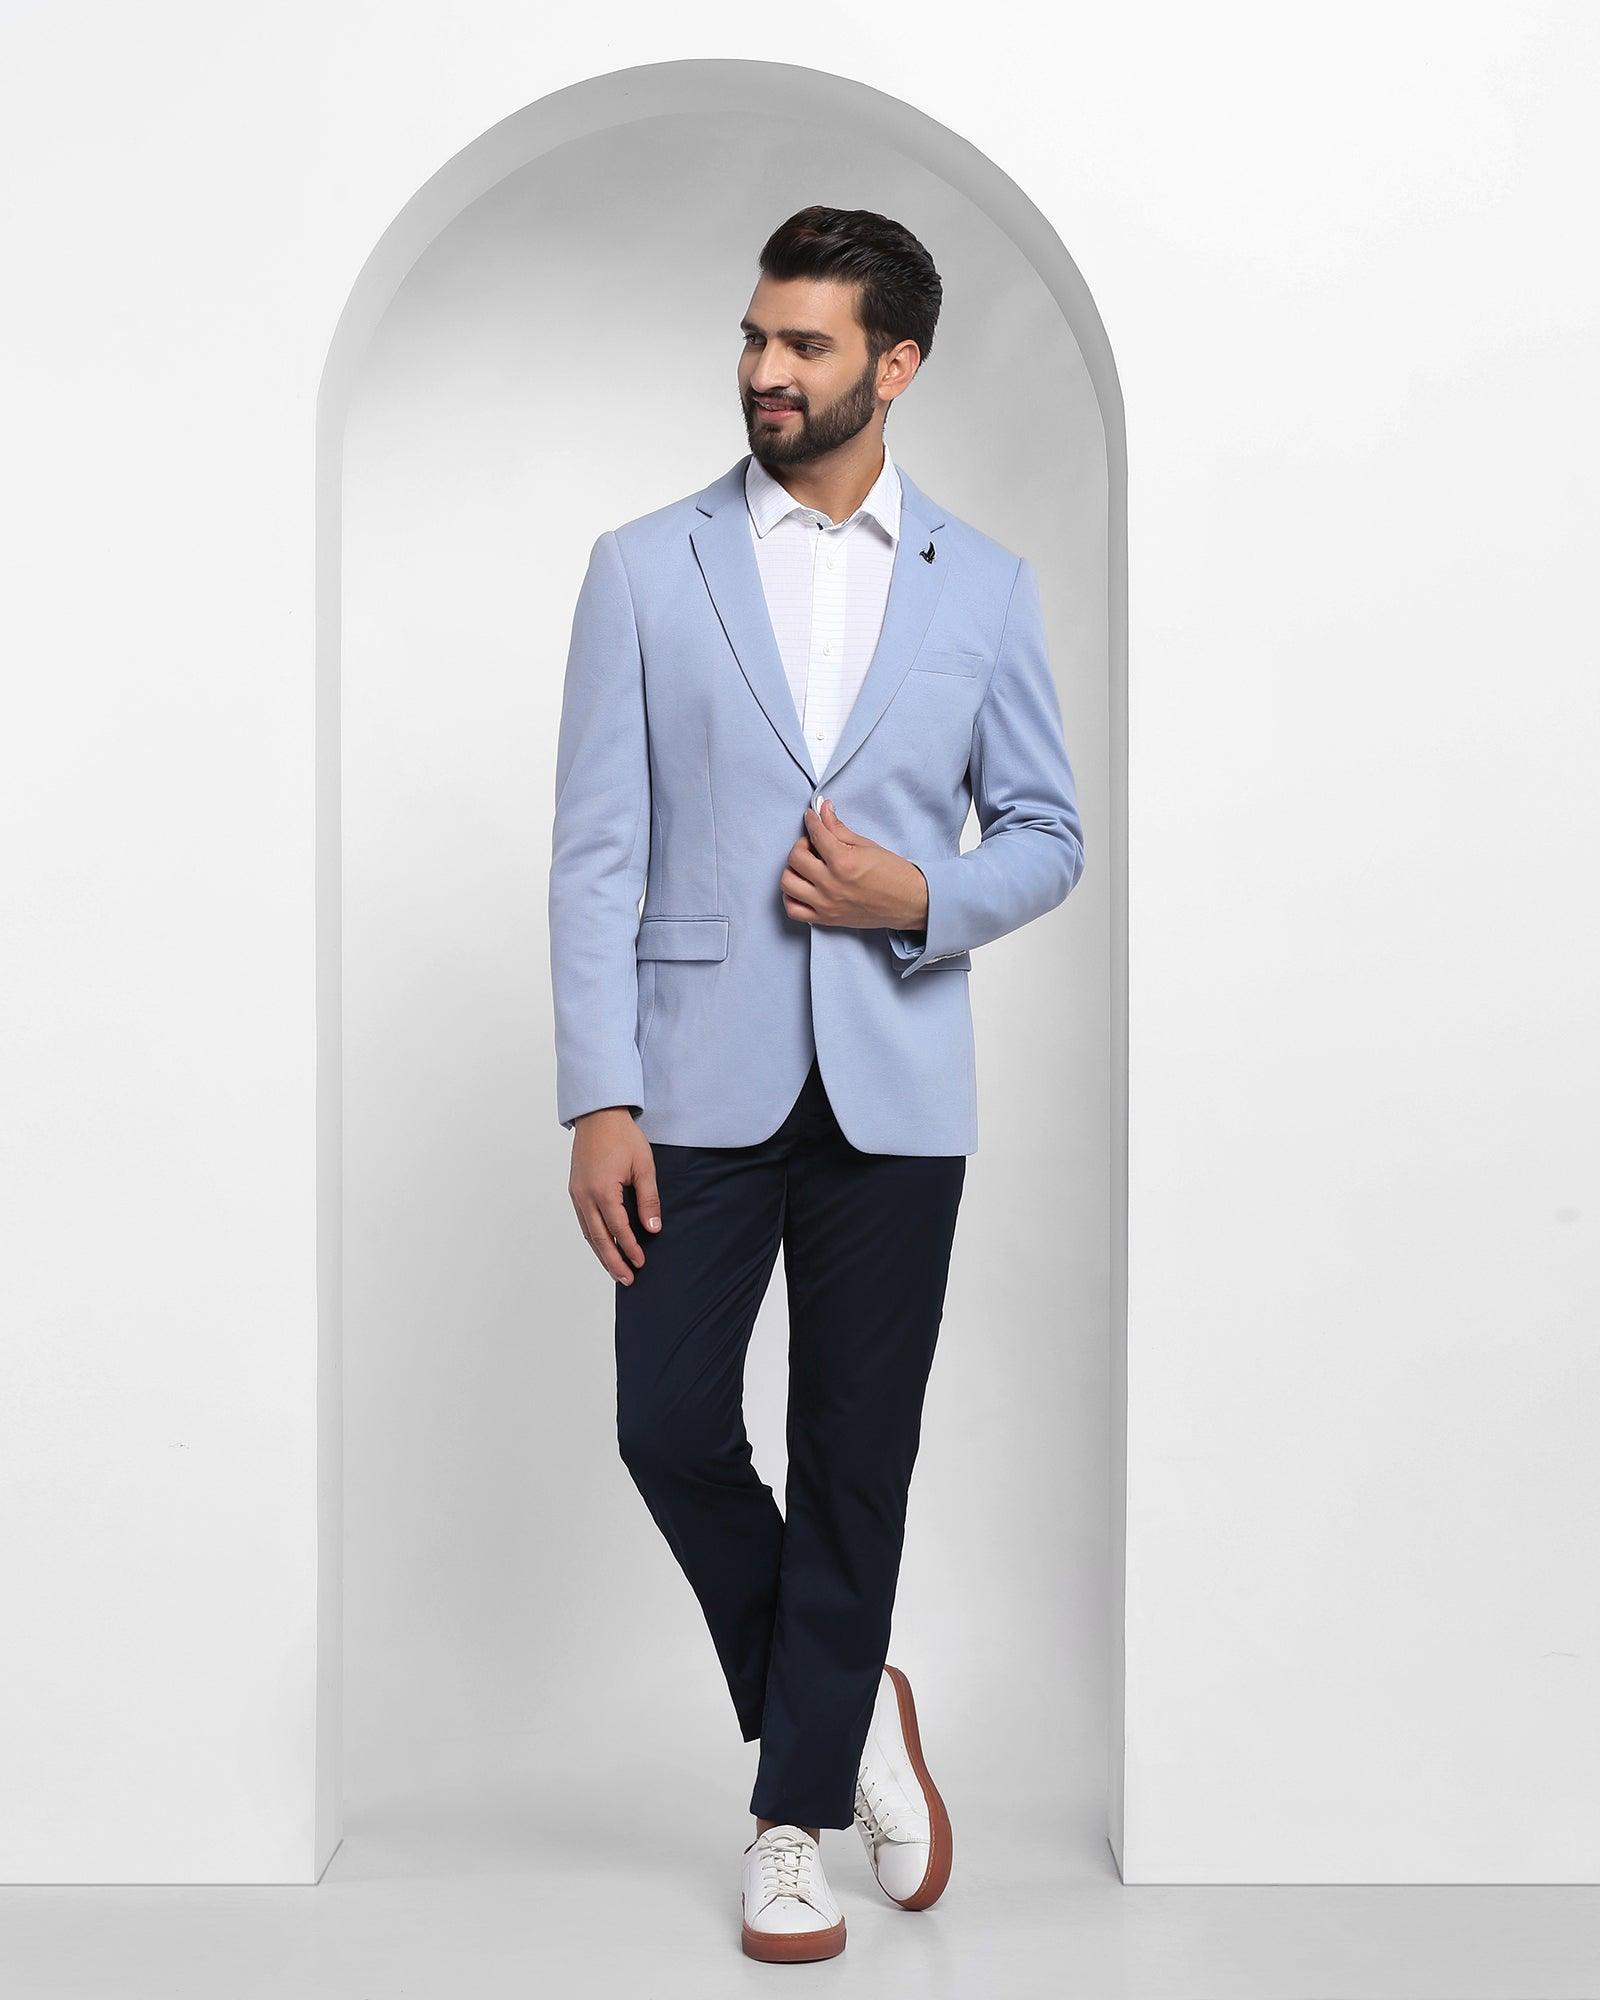 10 Faultless Suit & Shirt Combinations | AGR